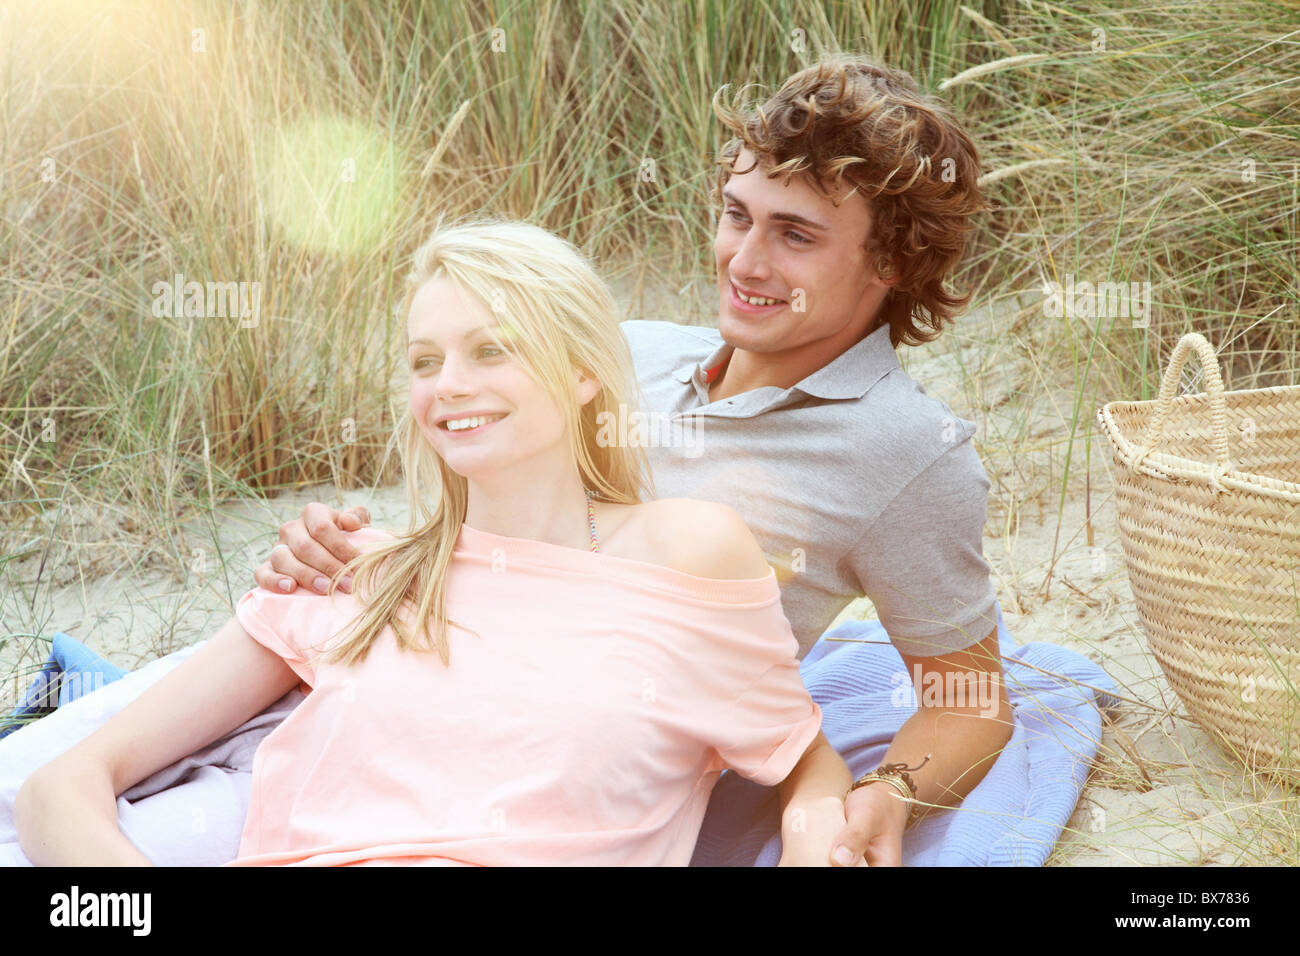 A couple having a romantic beach picnic Stock Photo